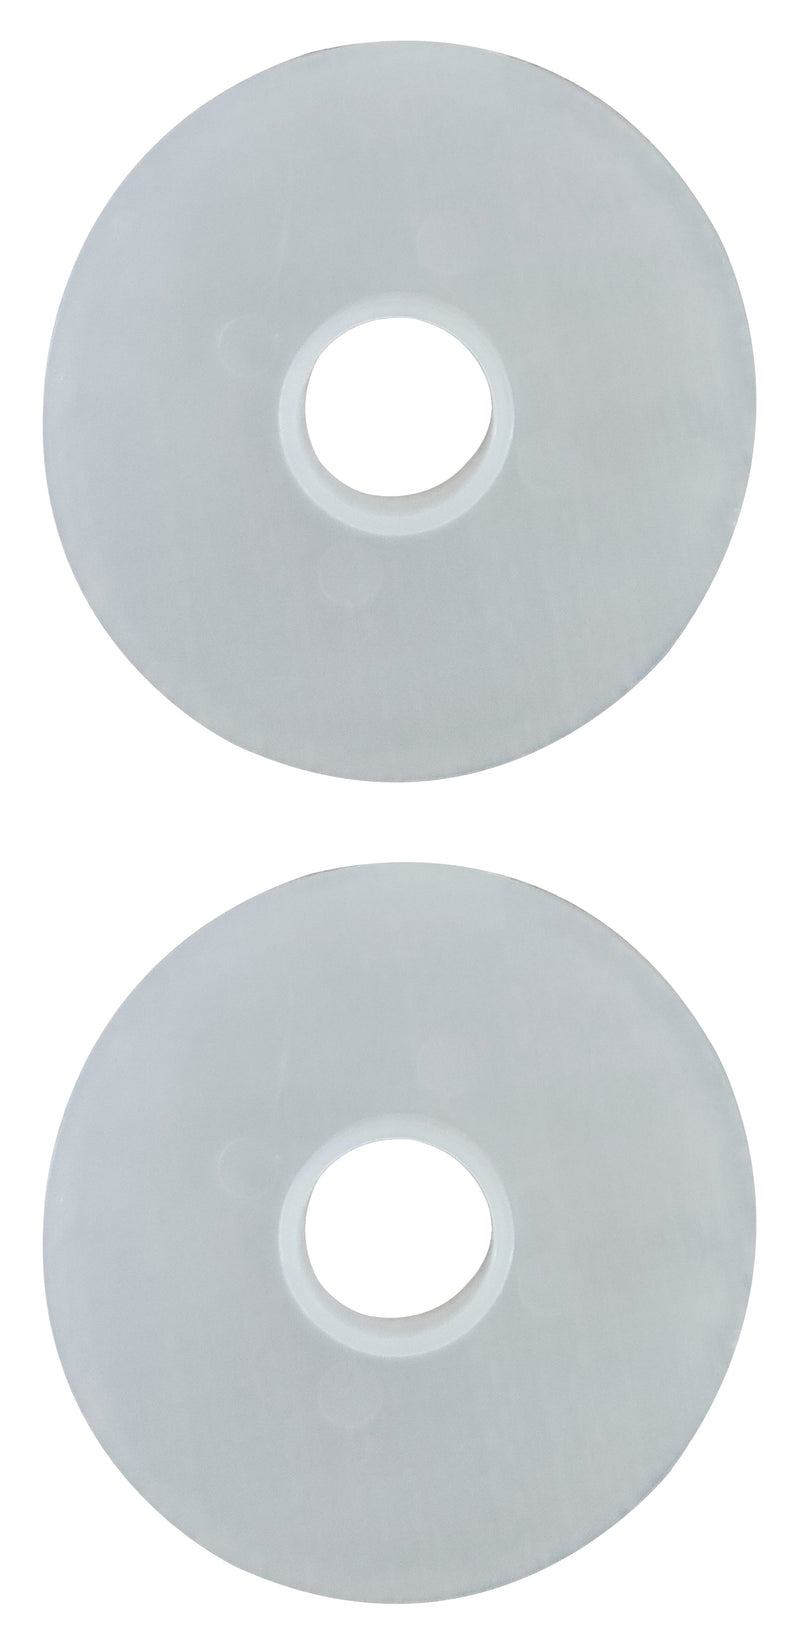 ISOGAS2DW Junta de plástico blanco de 2" de diámetro, par